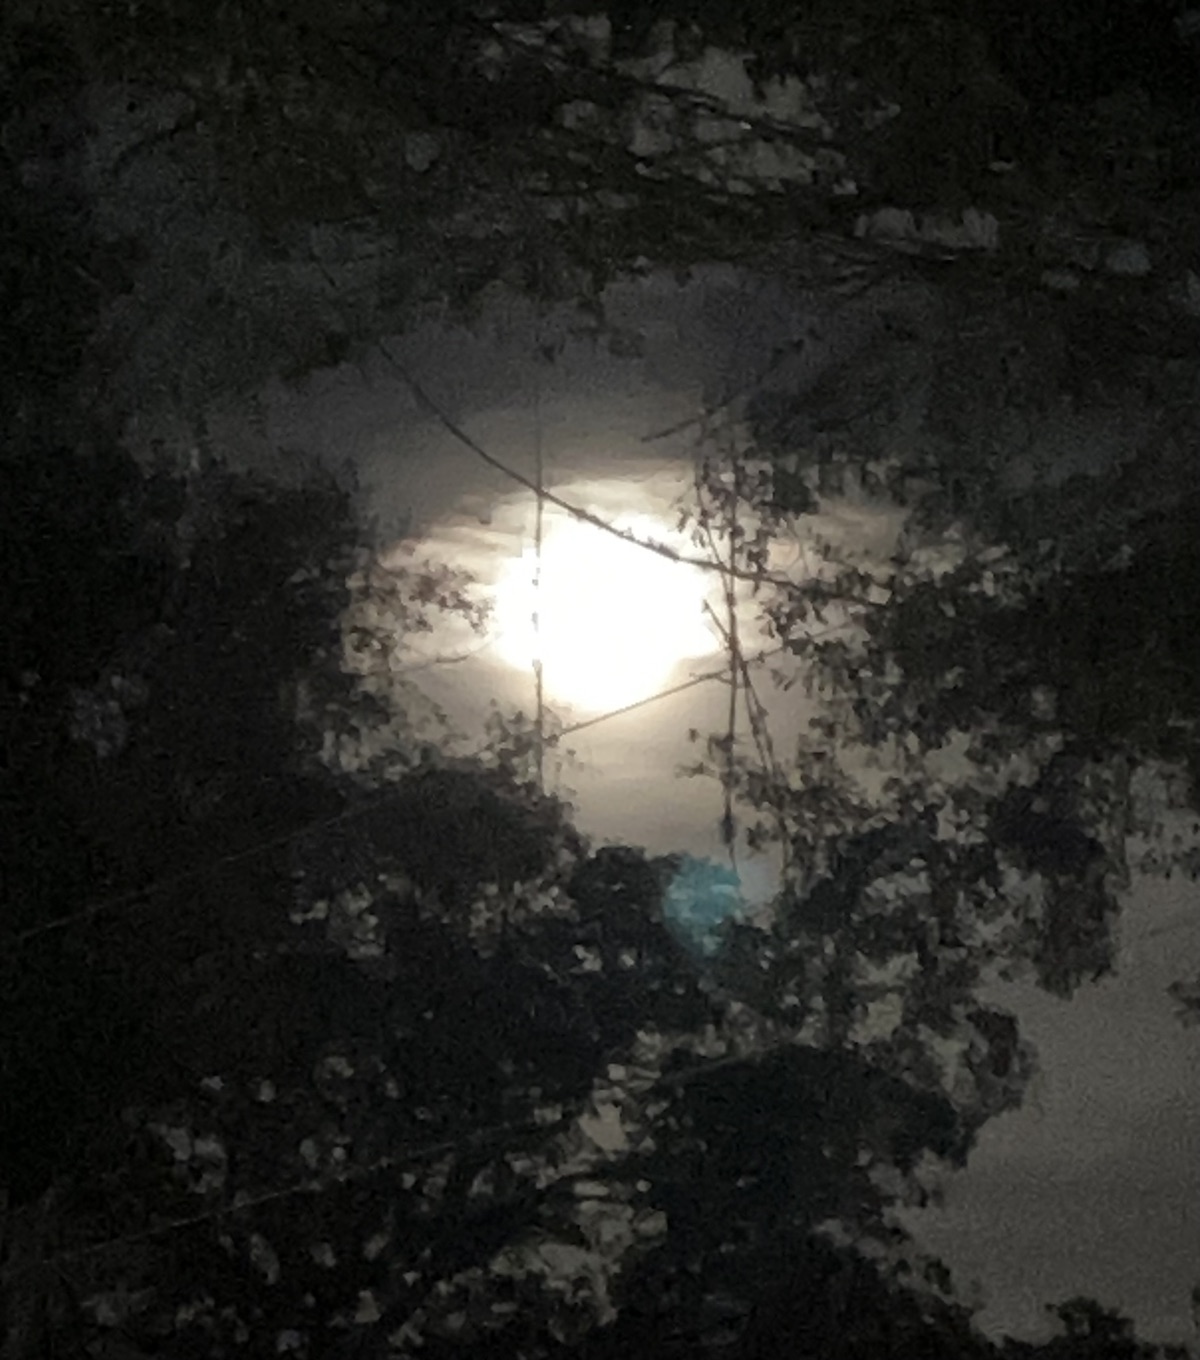 Moon shining through trees in Porter Shores neighborhood in Ocala